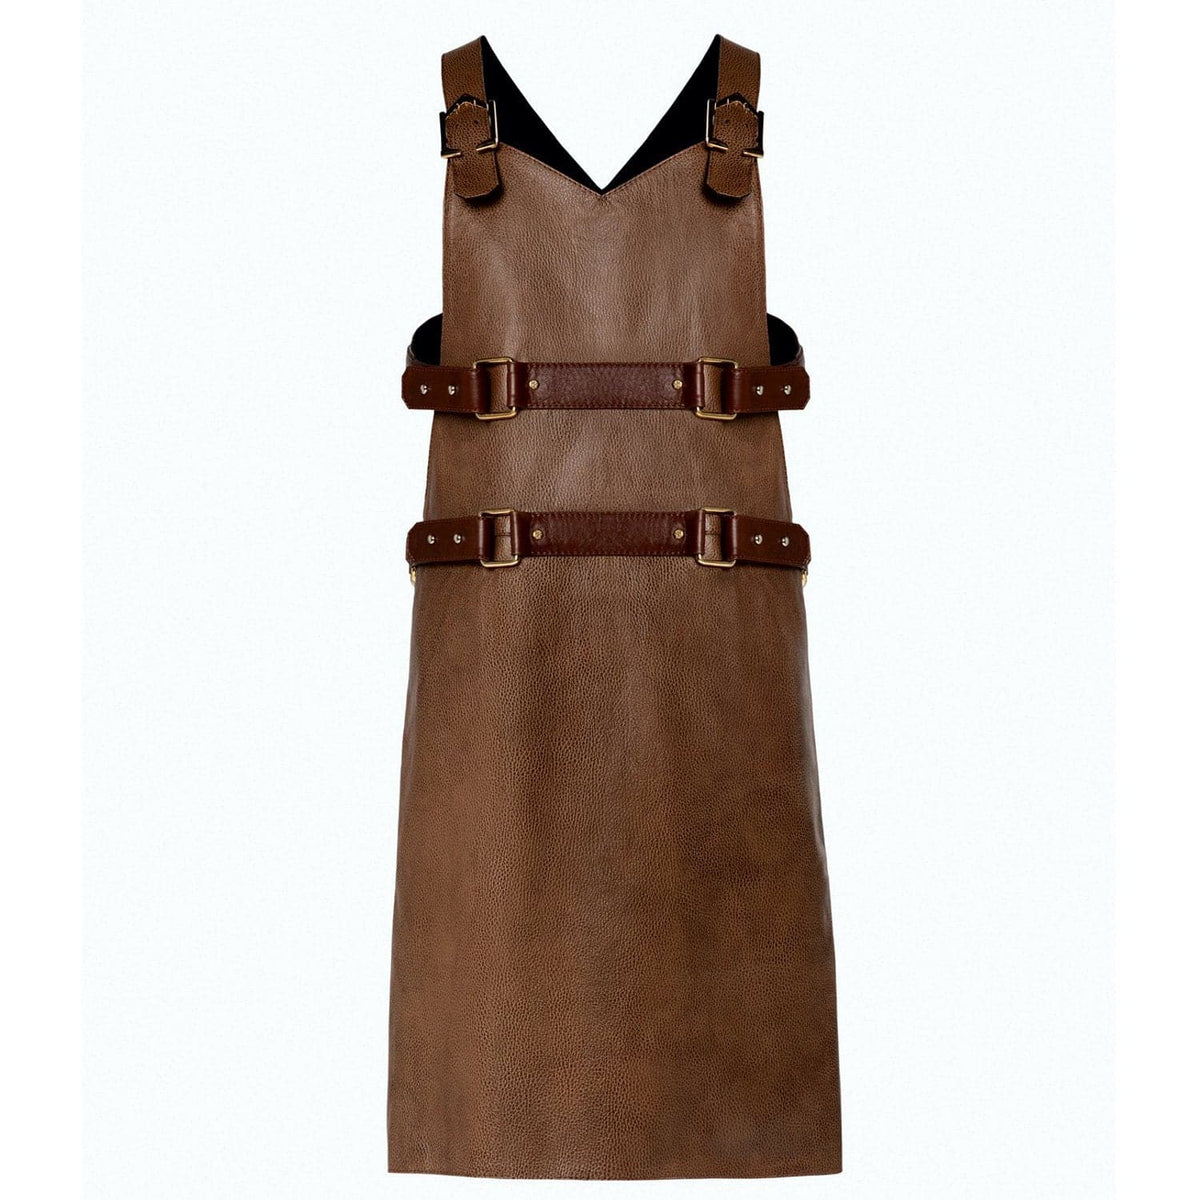 Eskandur men&#39;s brown leather luxury premium apron ghost mannequin front view